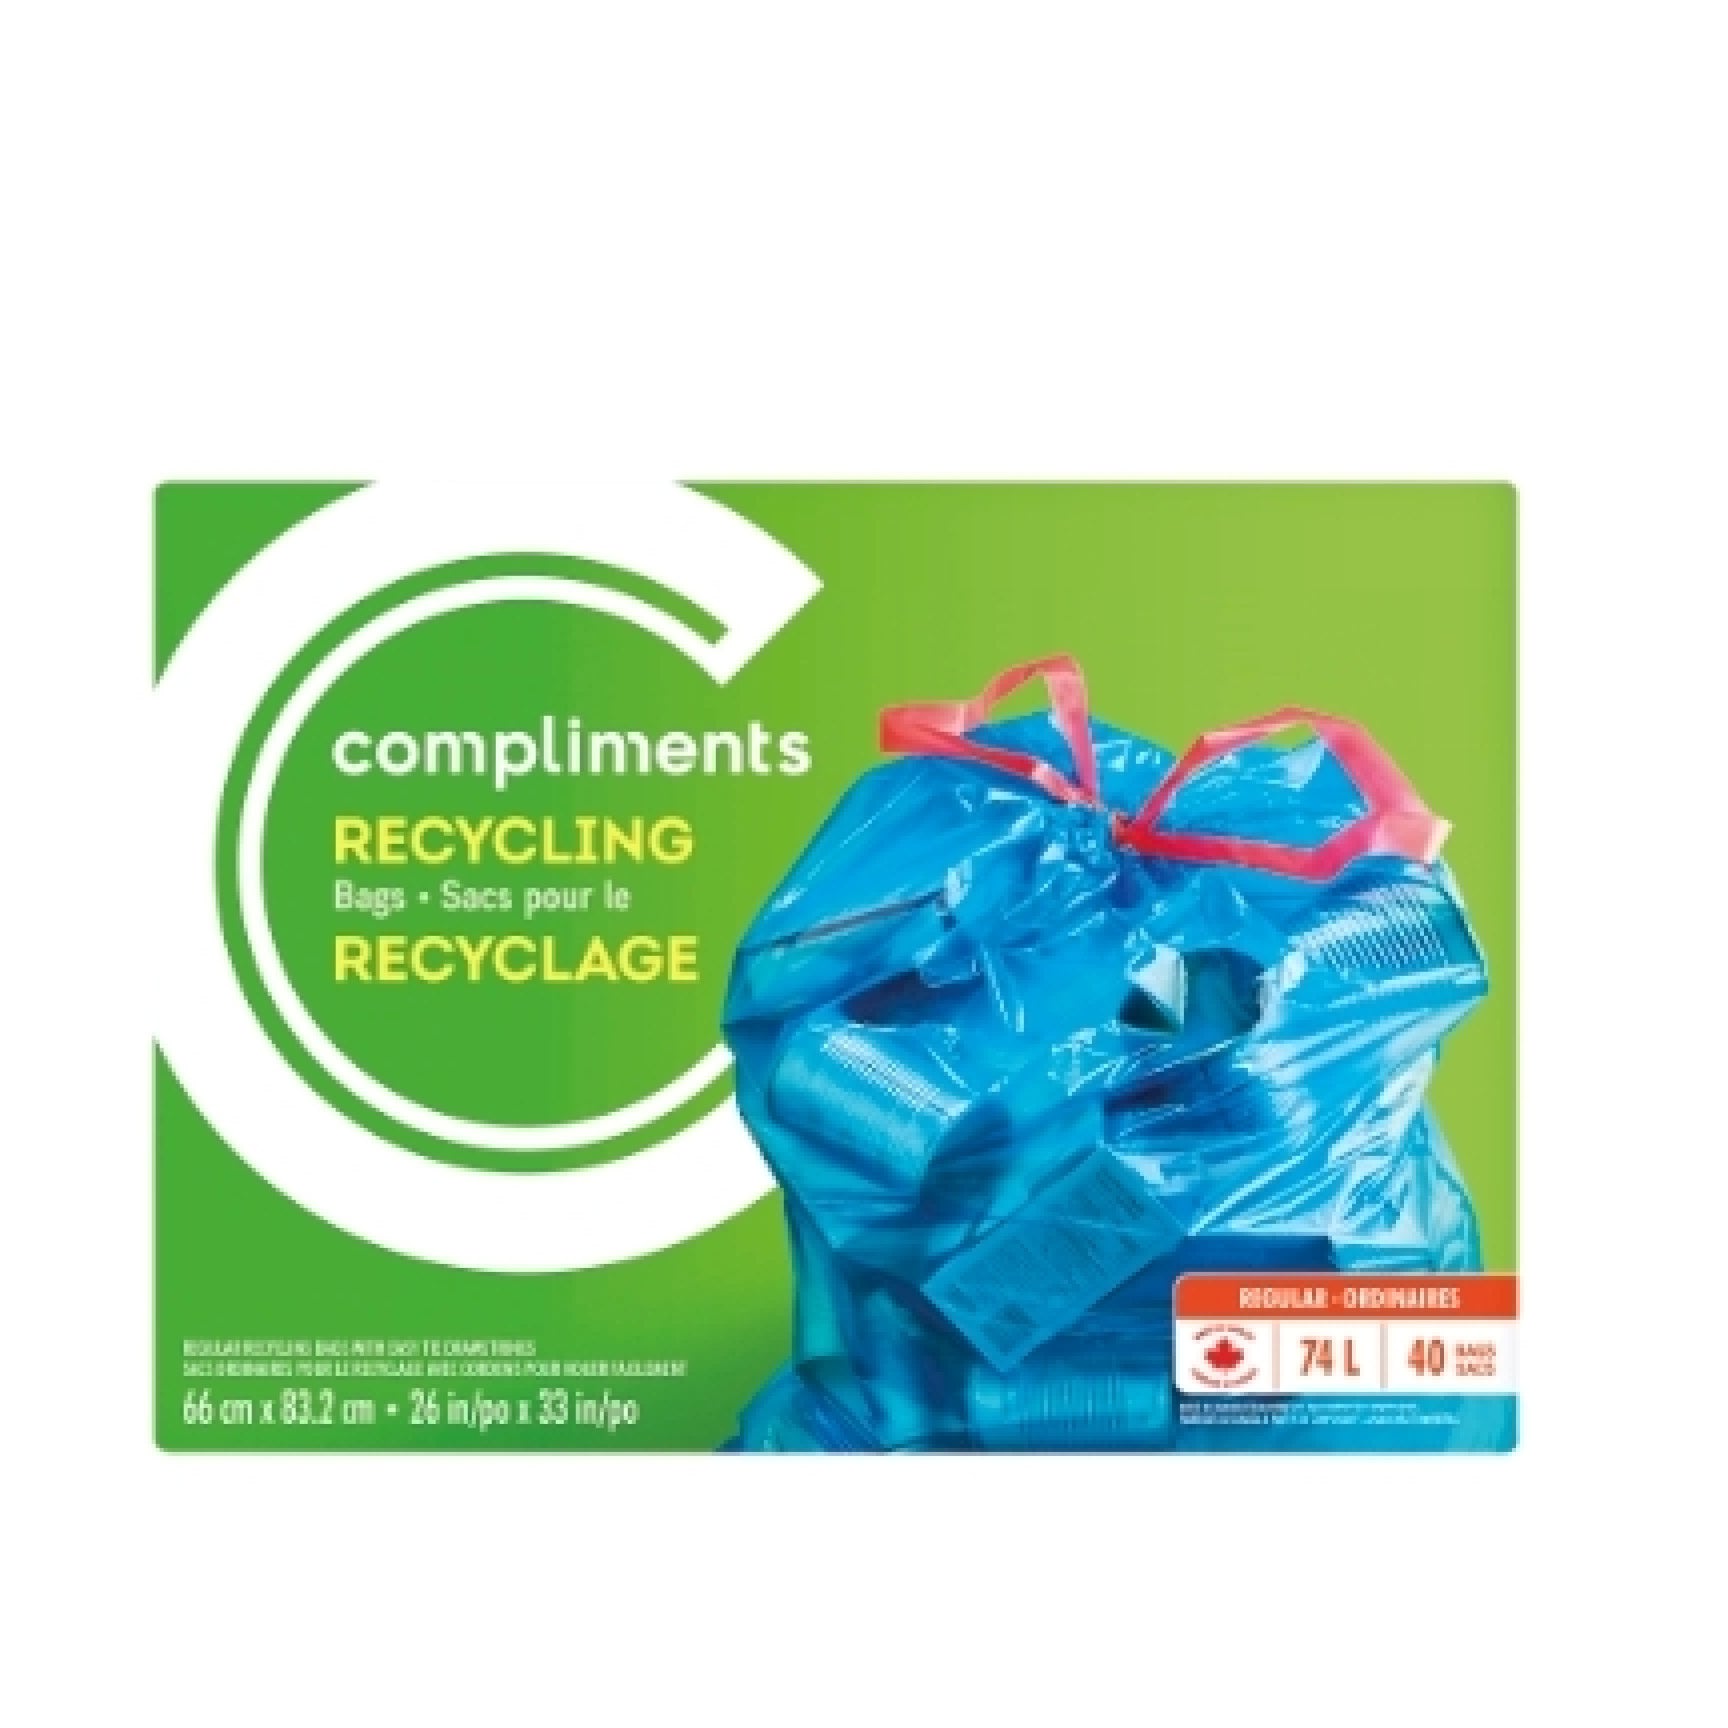 Compliments Recycling Bag, Drawstring, 74L, 40pk